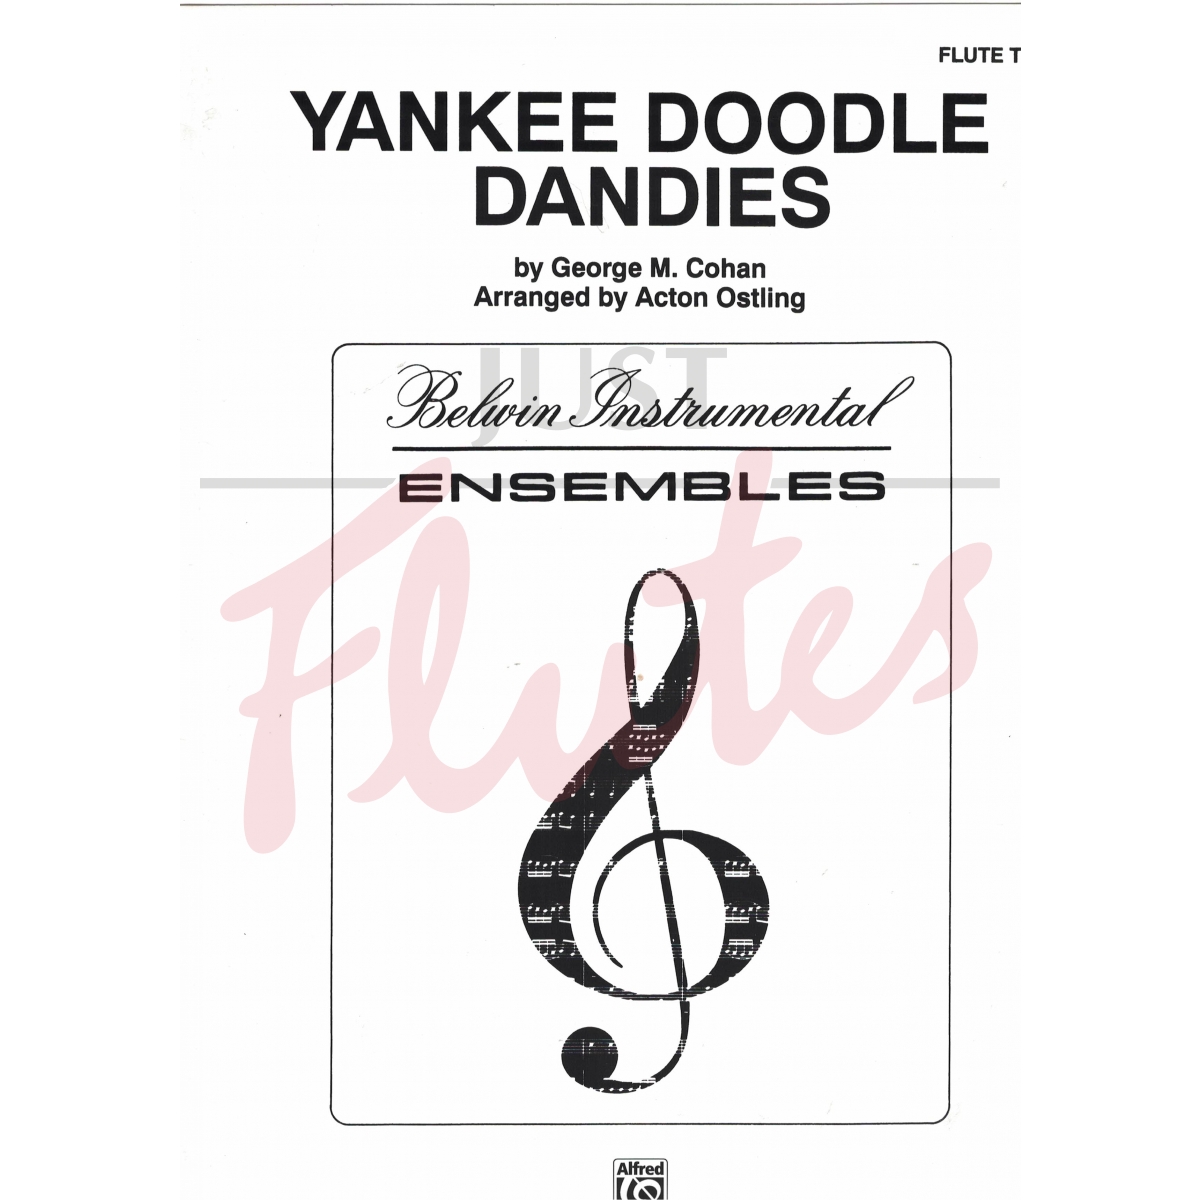 Yankee Doodle Dandies arranged for Three Flutes